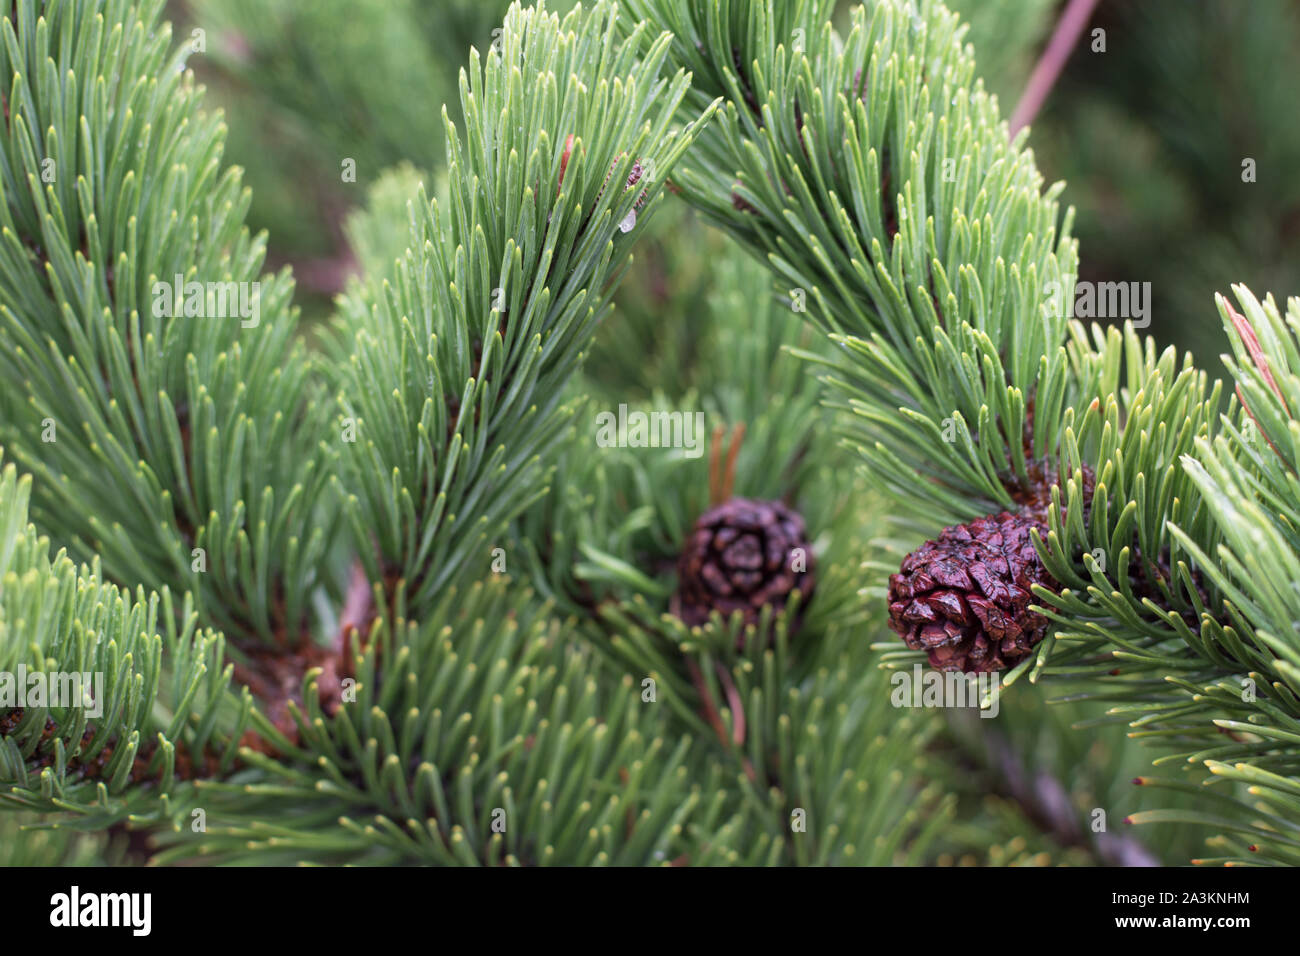 Douglas fir (Pseudotsuga menziesii) branch with cones closeup background. Stock Photo